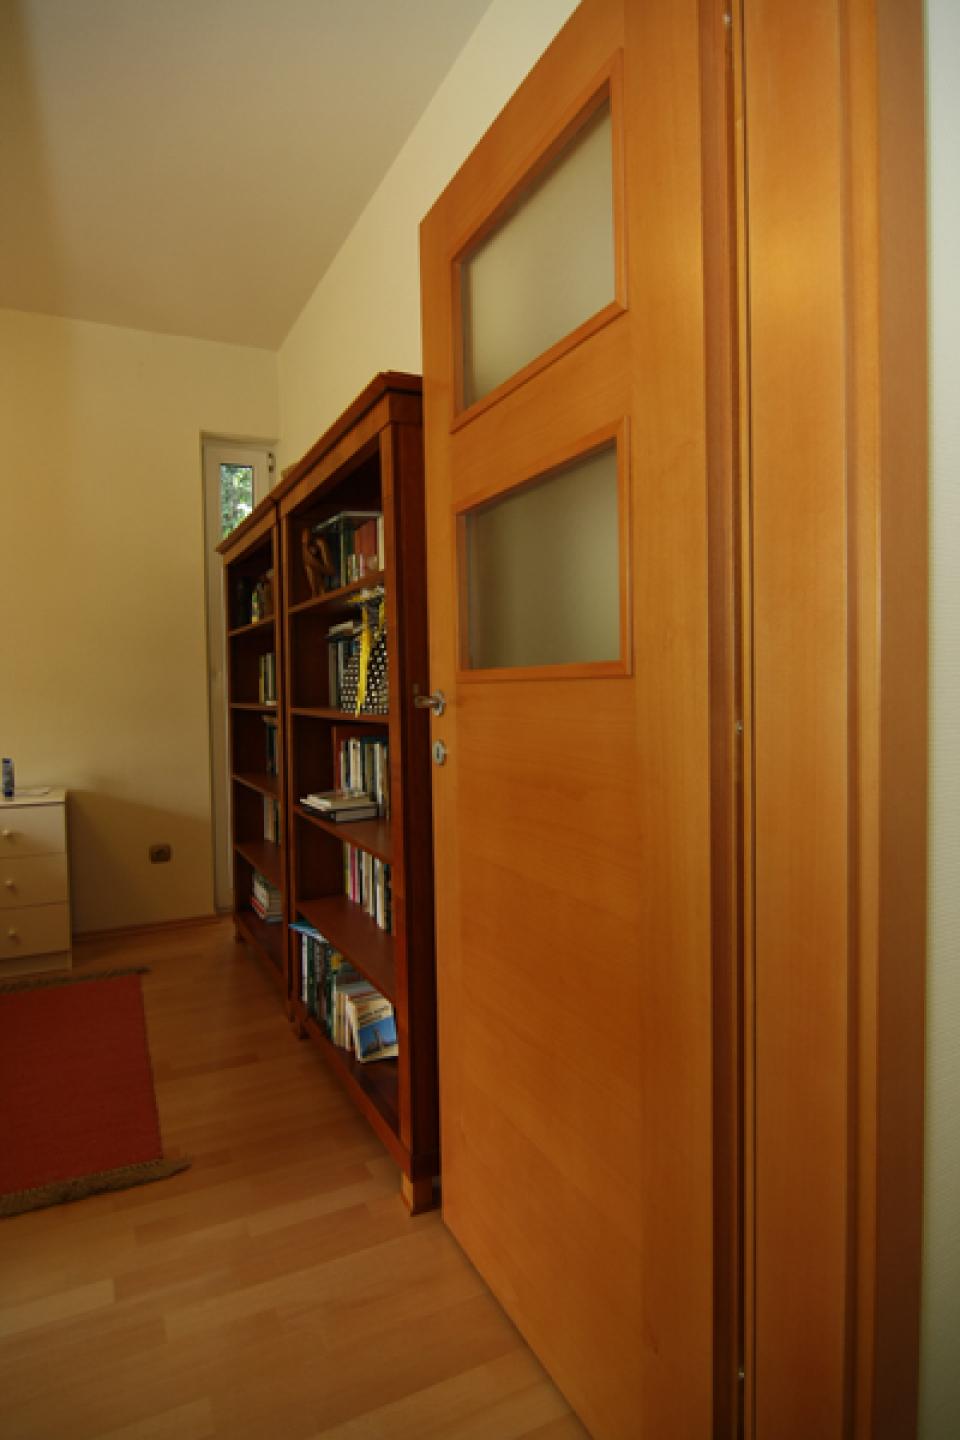 Bilbao - Malaga ajtókombinációk egy pasaréti lakásban | Referencia - Ajtóház